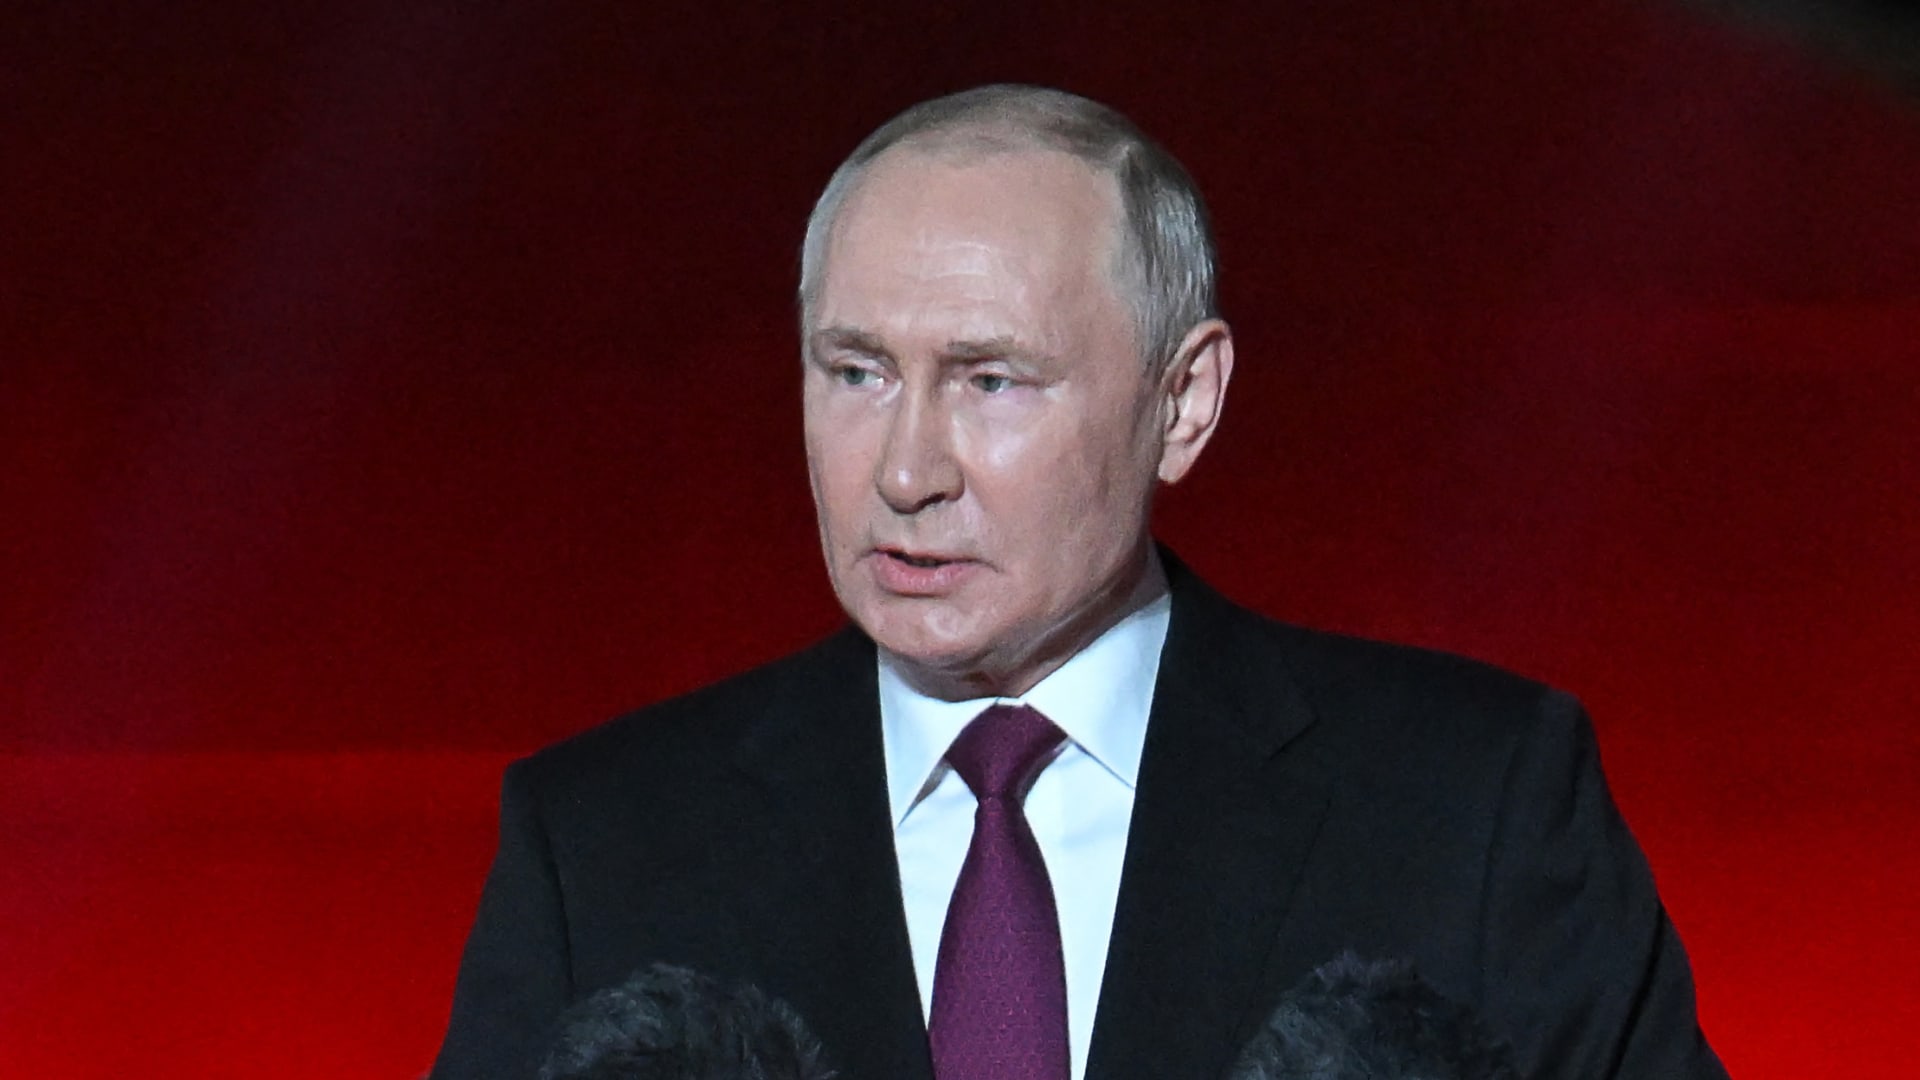 Plane crash will cement Putin's authority, Kremlin critic